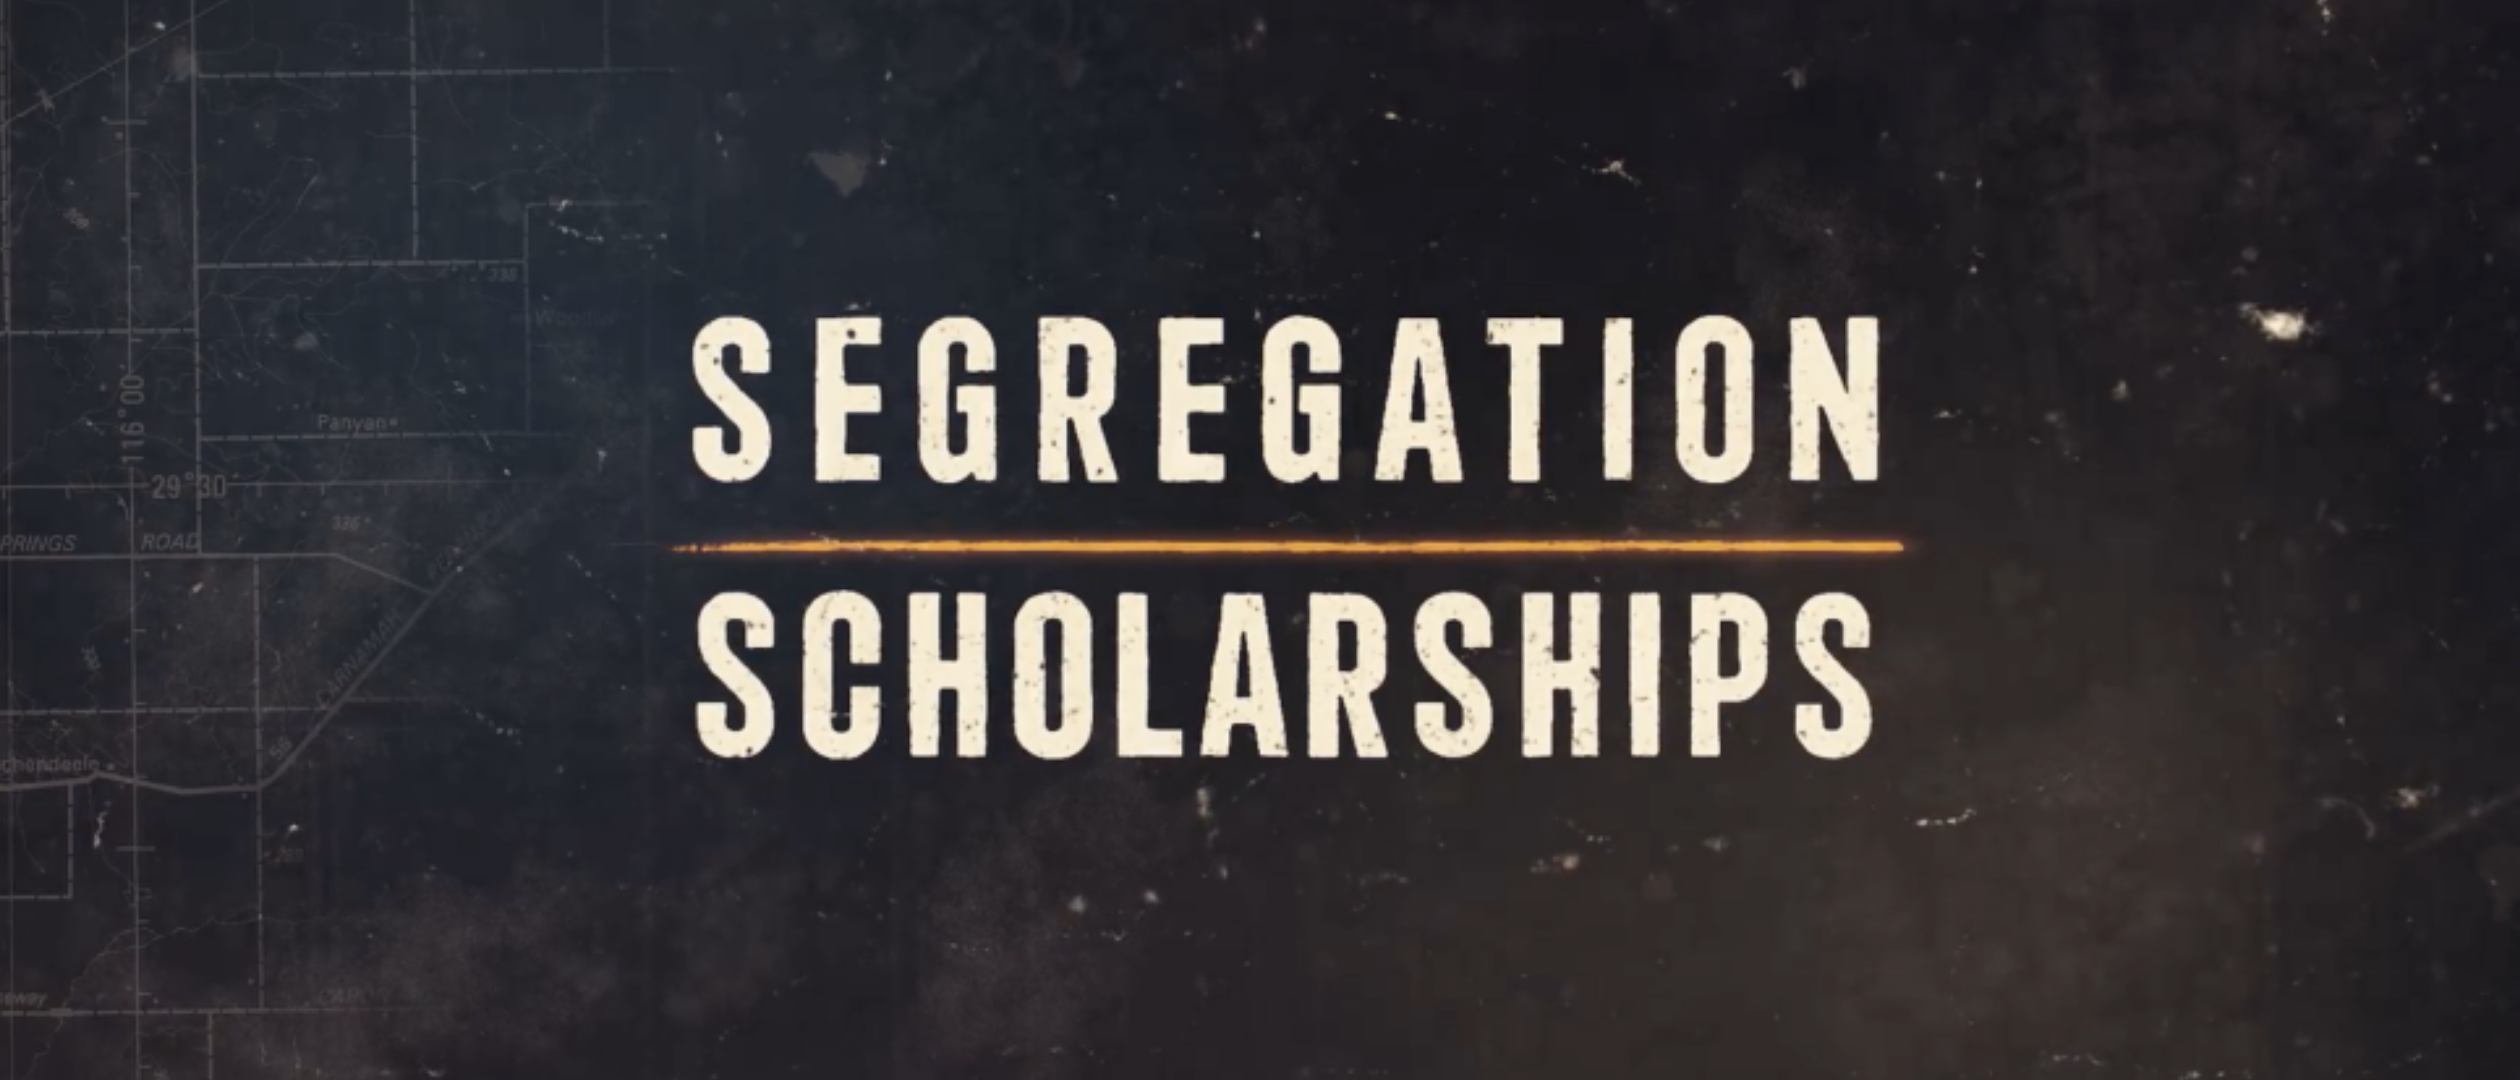 Segregation Scholarships hero banner